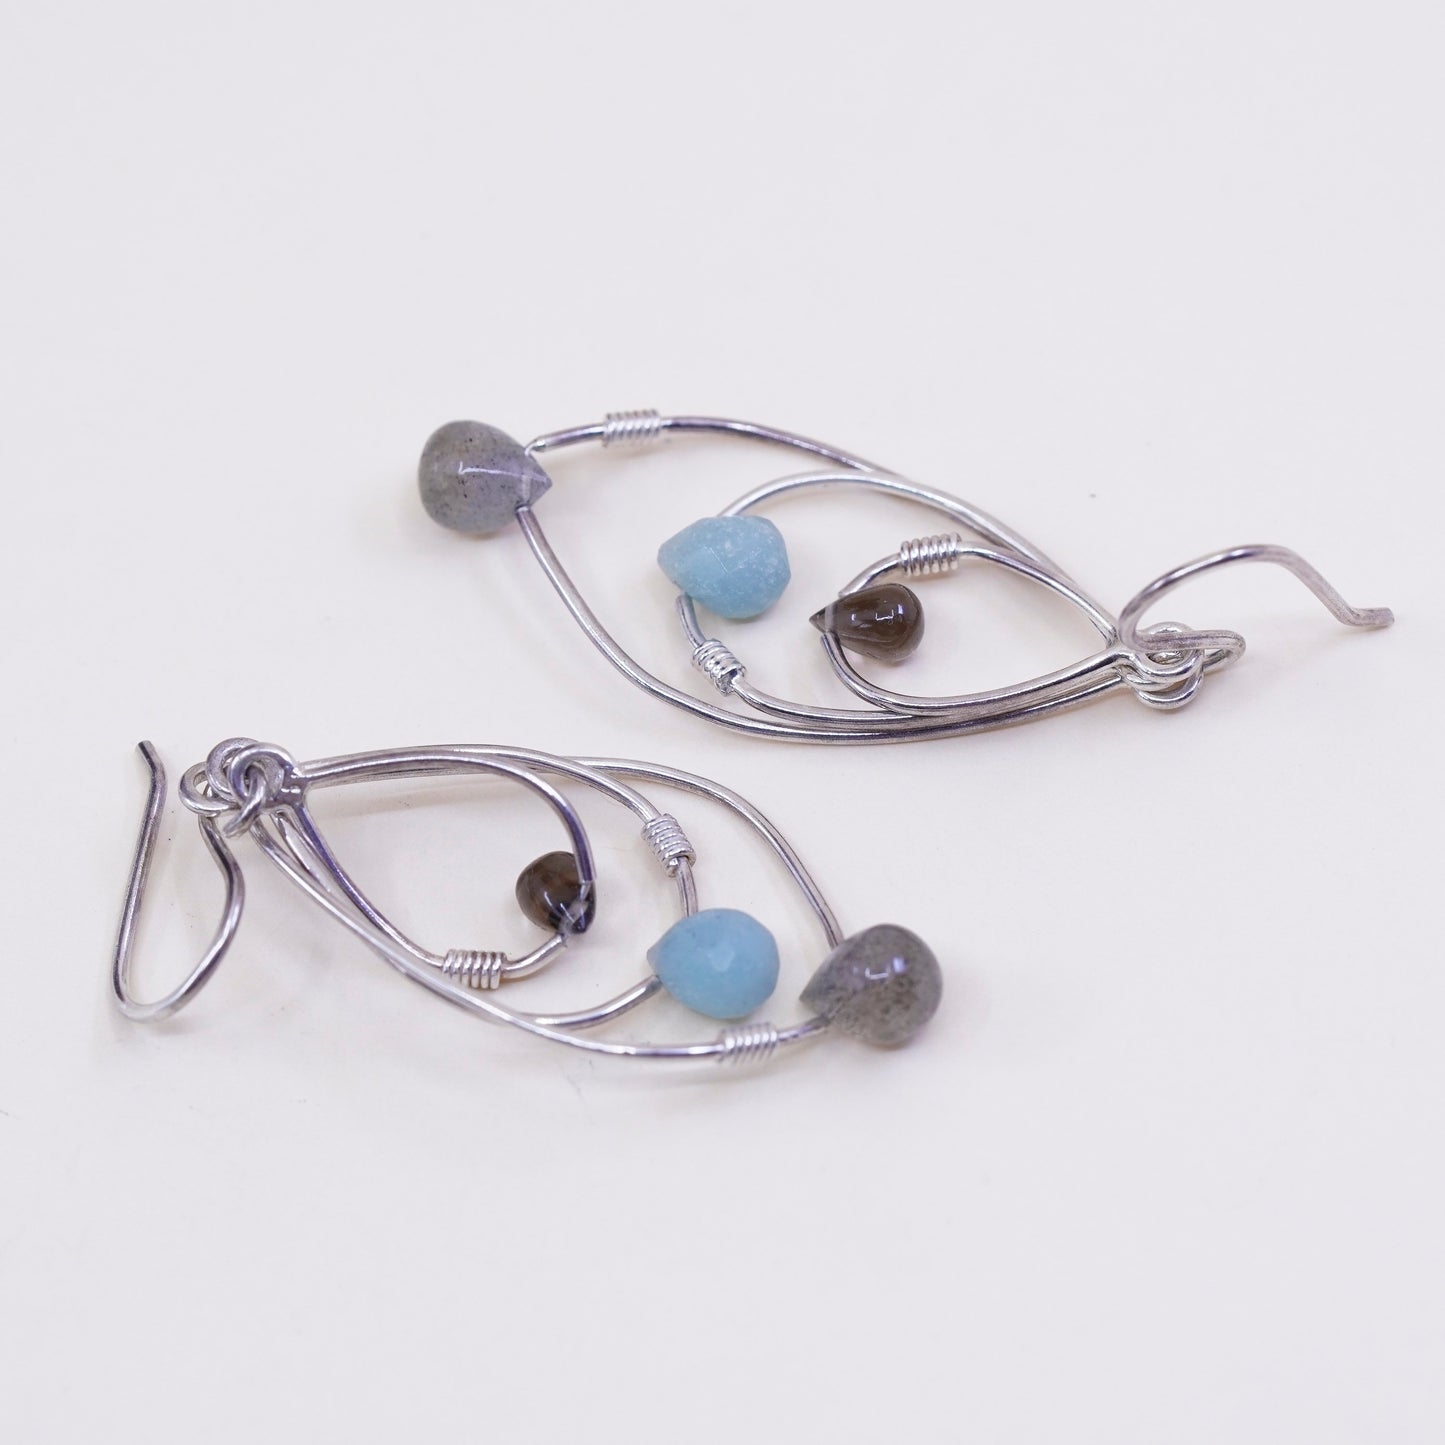 modern sterling silver earrings, 925 teardrop dangles with labradorite and jade